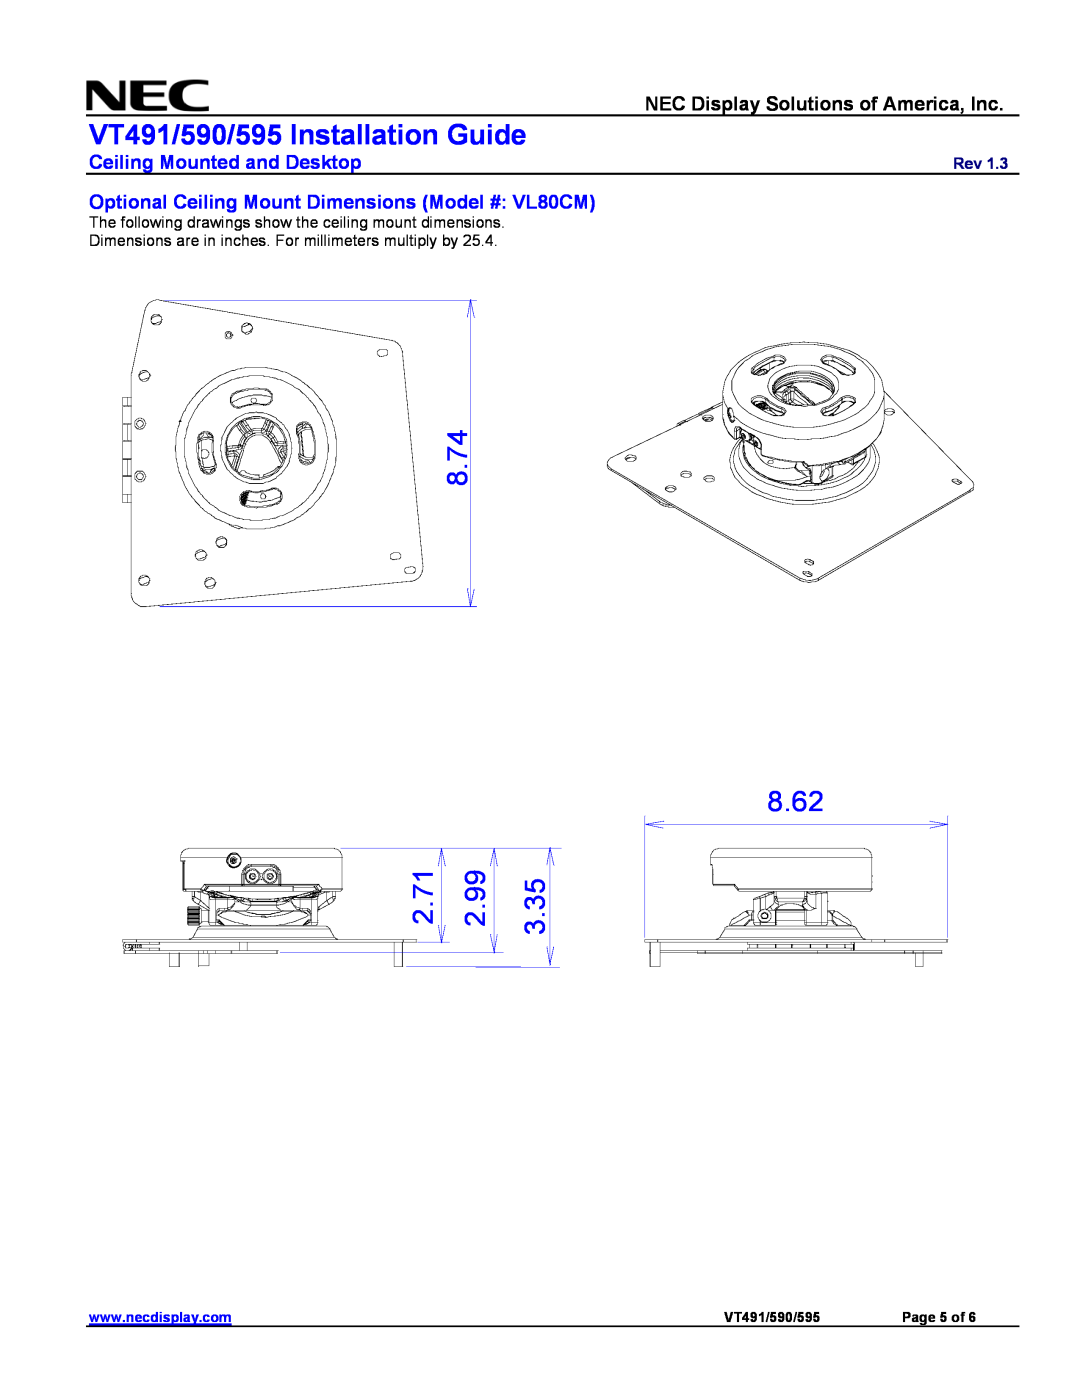 NEC Optional Ceiling Mount Dimensions Model #: VL80CM, 8.74, 2.71, 2.99, 8.62, VT491/590/595 Installation Guide 